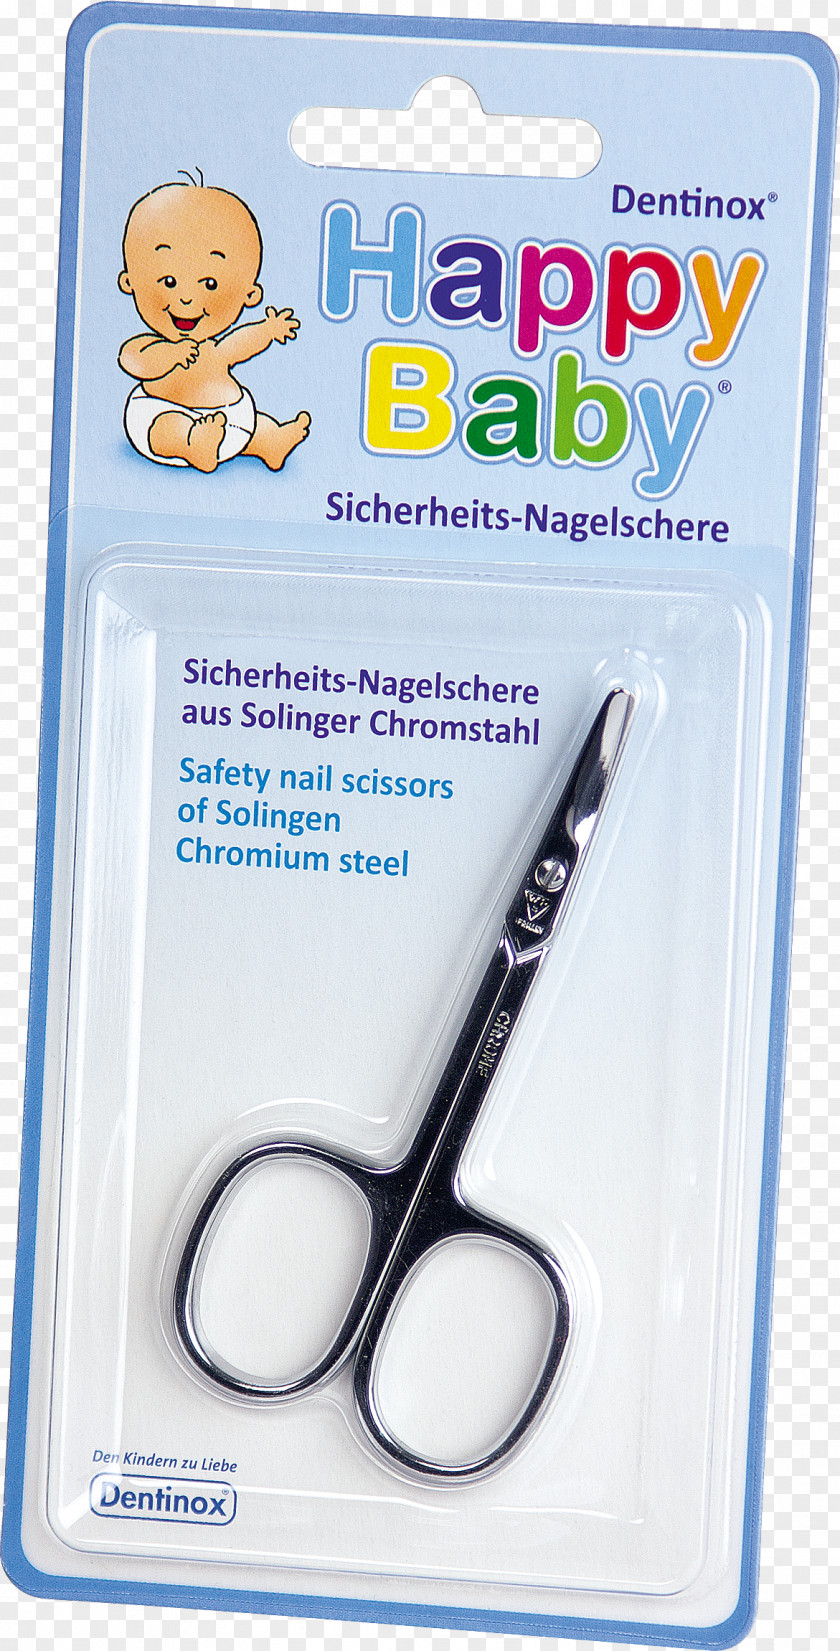 Baby Happy Dentinox Infant Nasensauger Child Scissors PNG